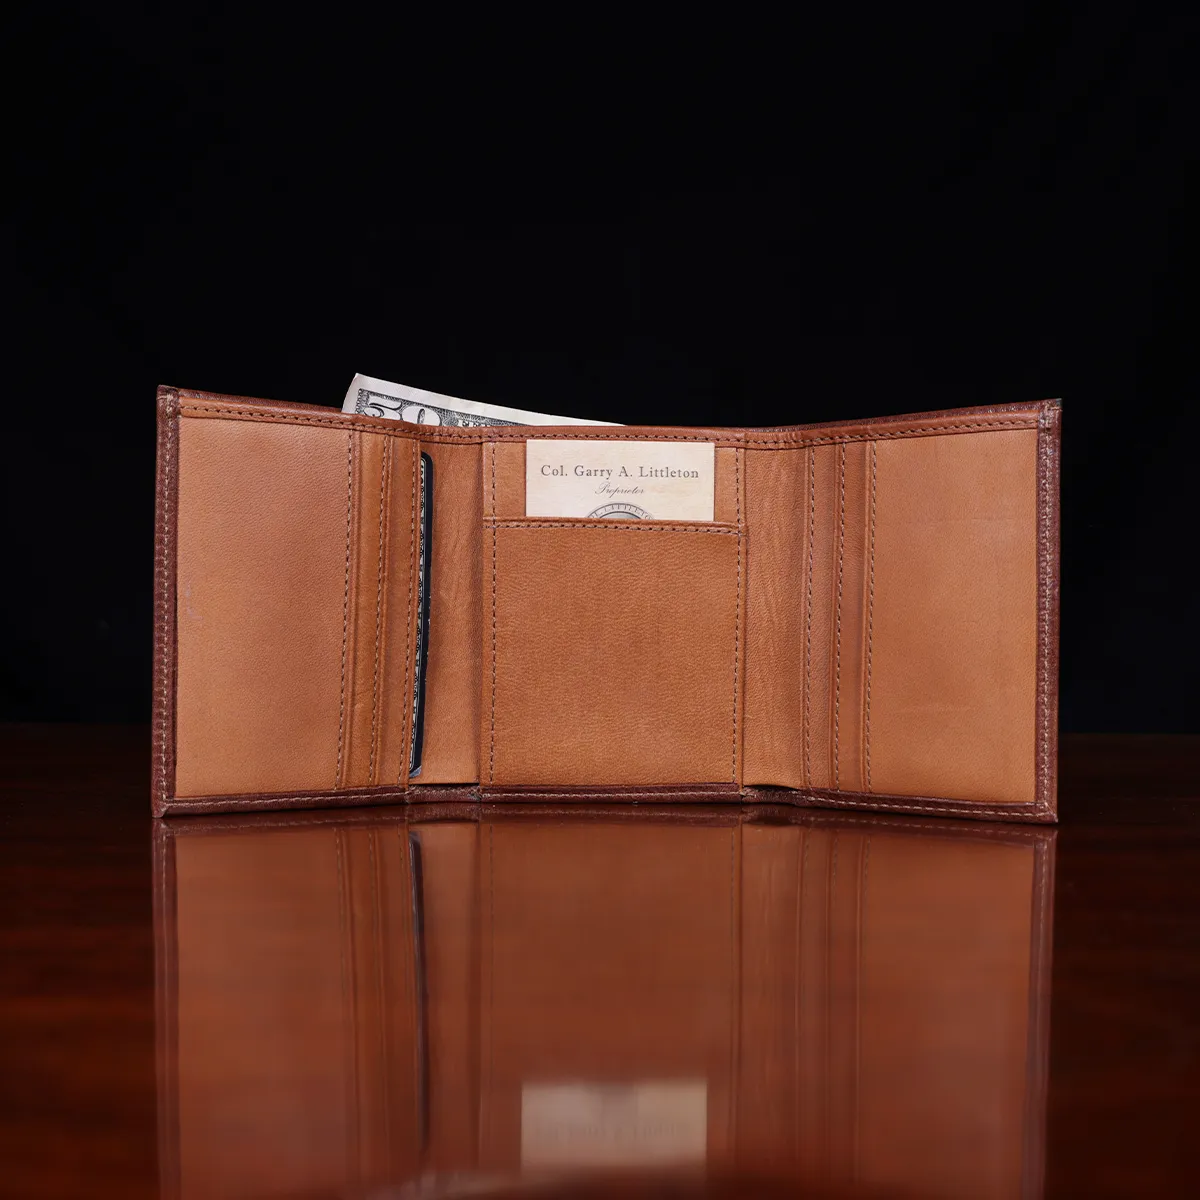 Tri-Fold Wallet